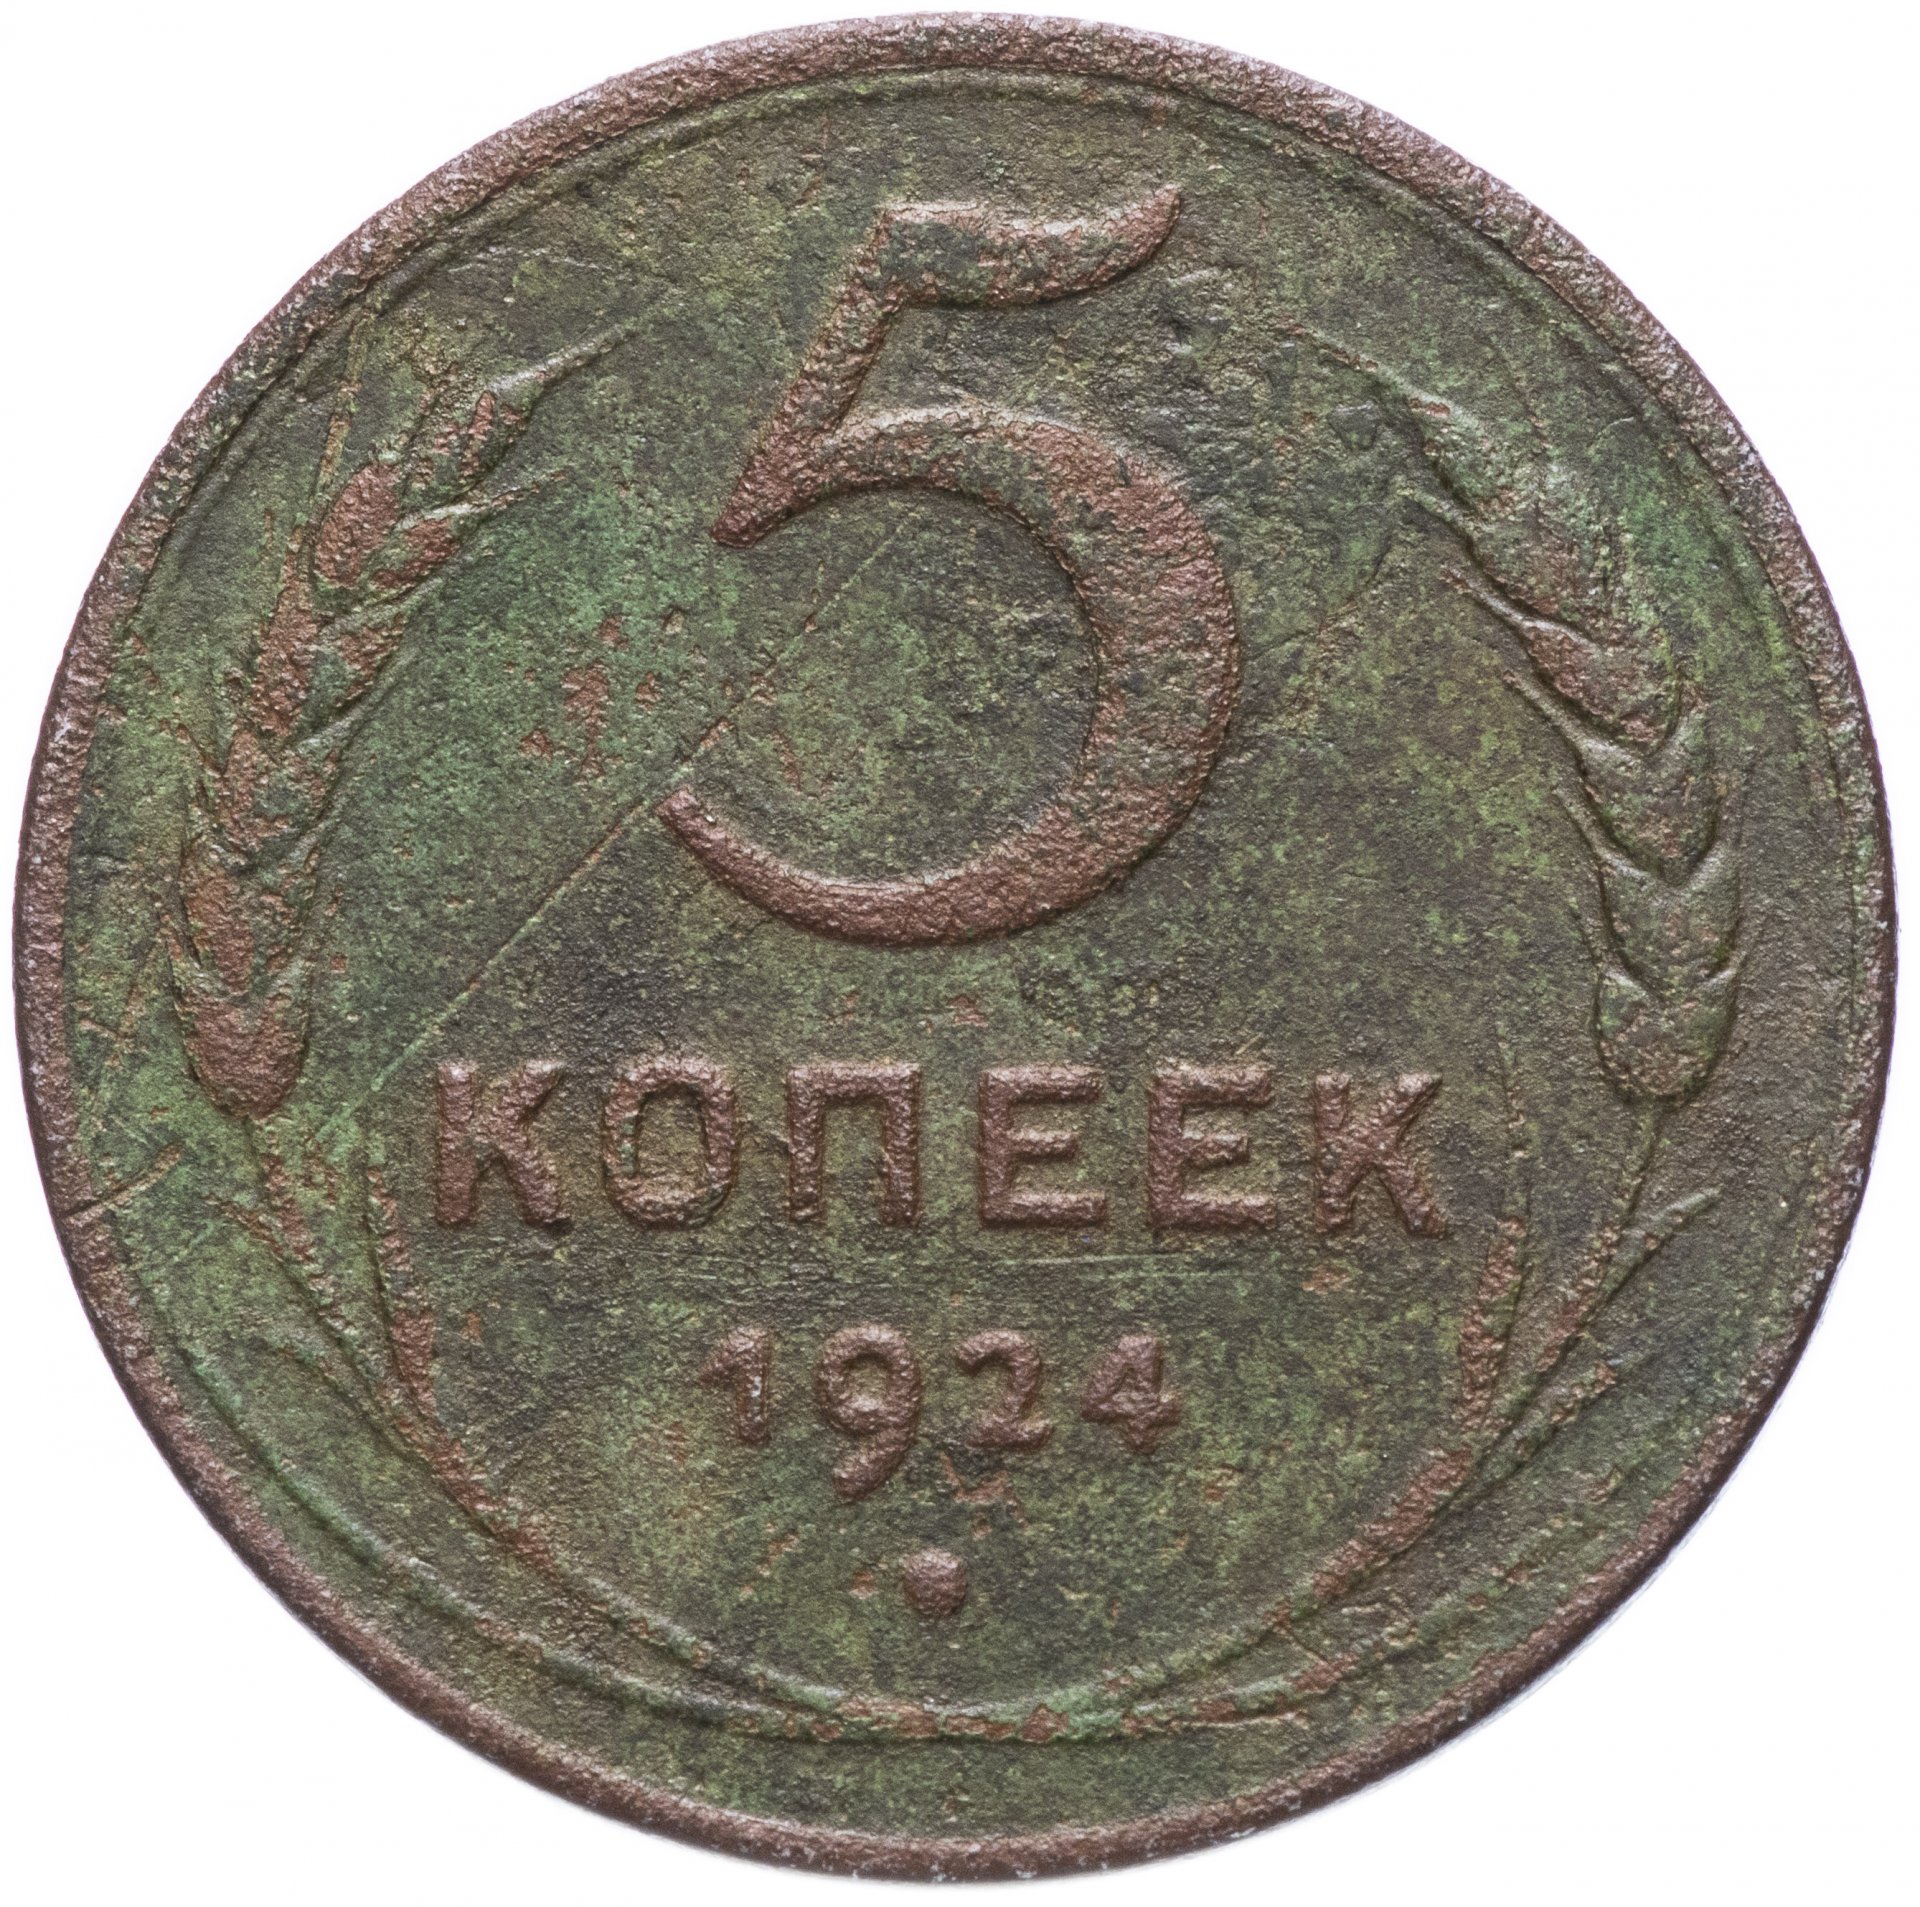 3 рубля 5 копеек. 5 Копеек СССР 1924. Монета 5 копеек 1924 года. Пять копеек 1924 года. Советские 5 копеек.